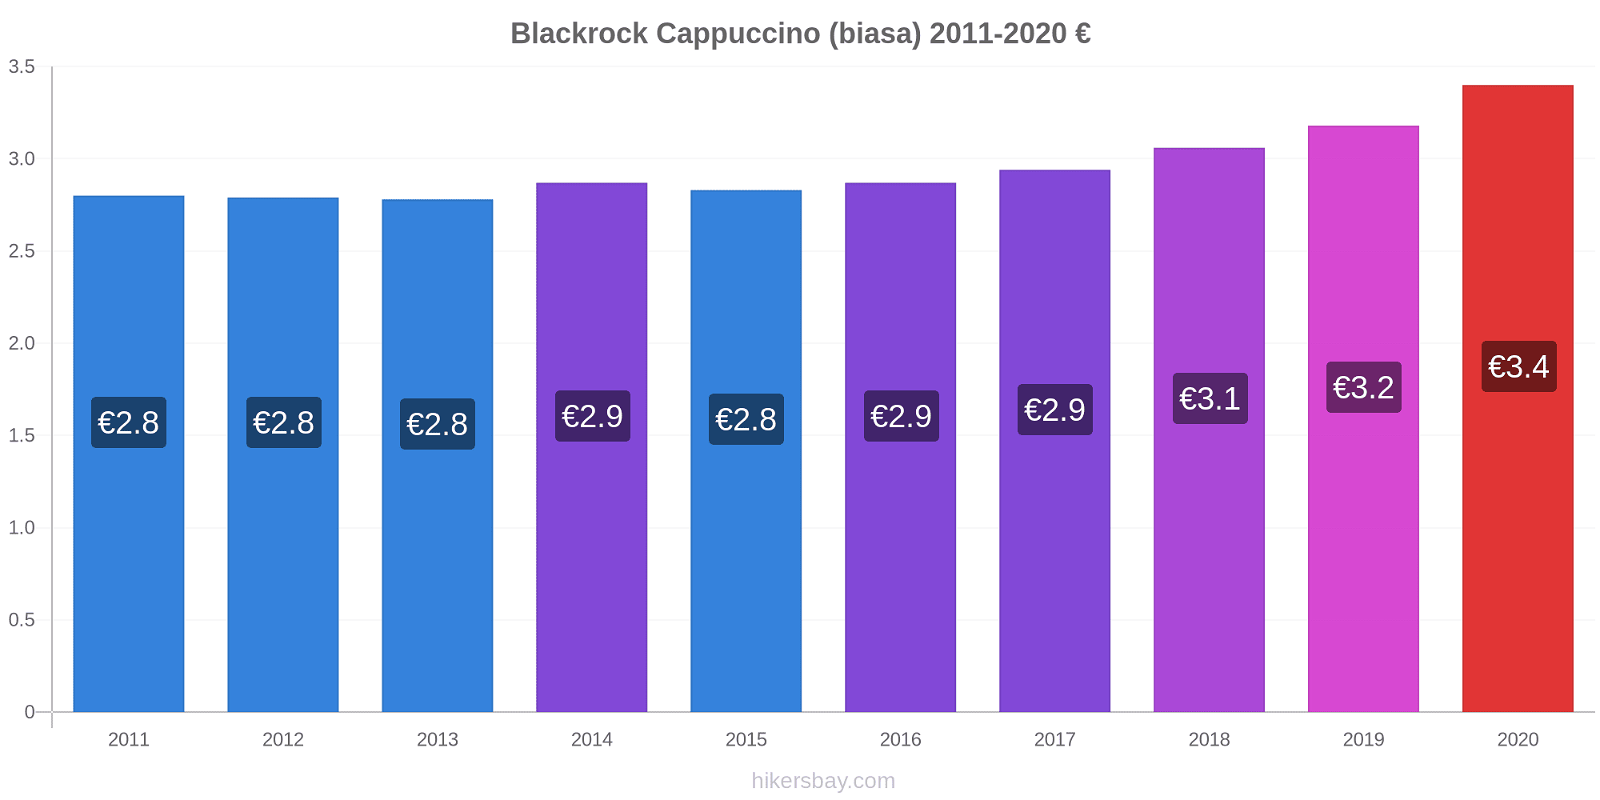 Blackrock perubahan harga Cappuccino (biasa) hikersbay.com